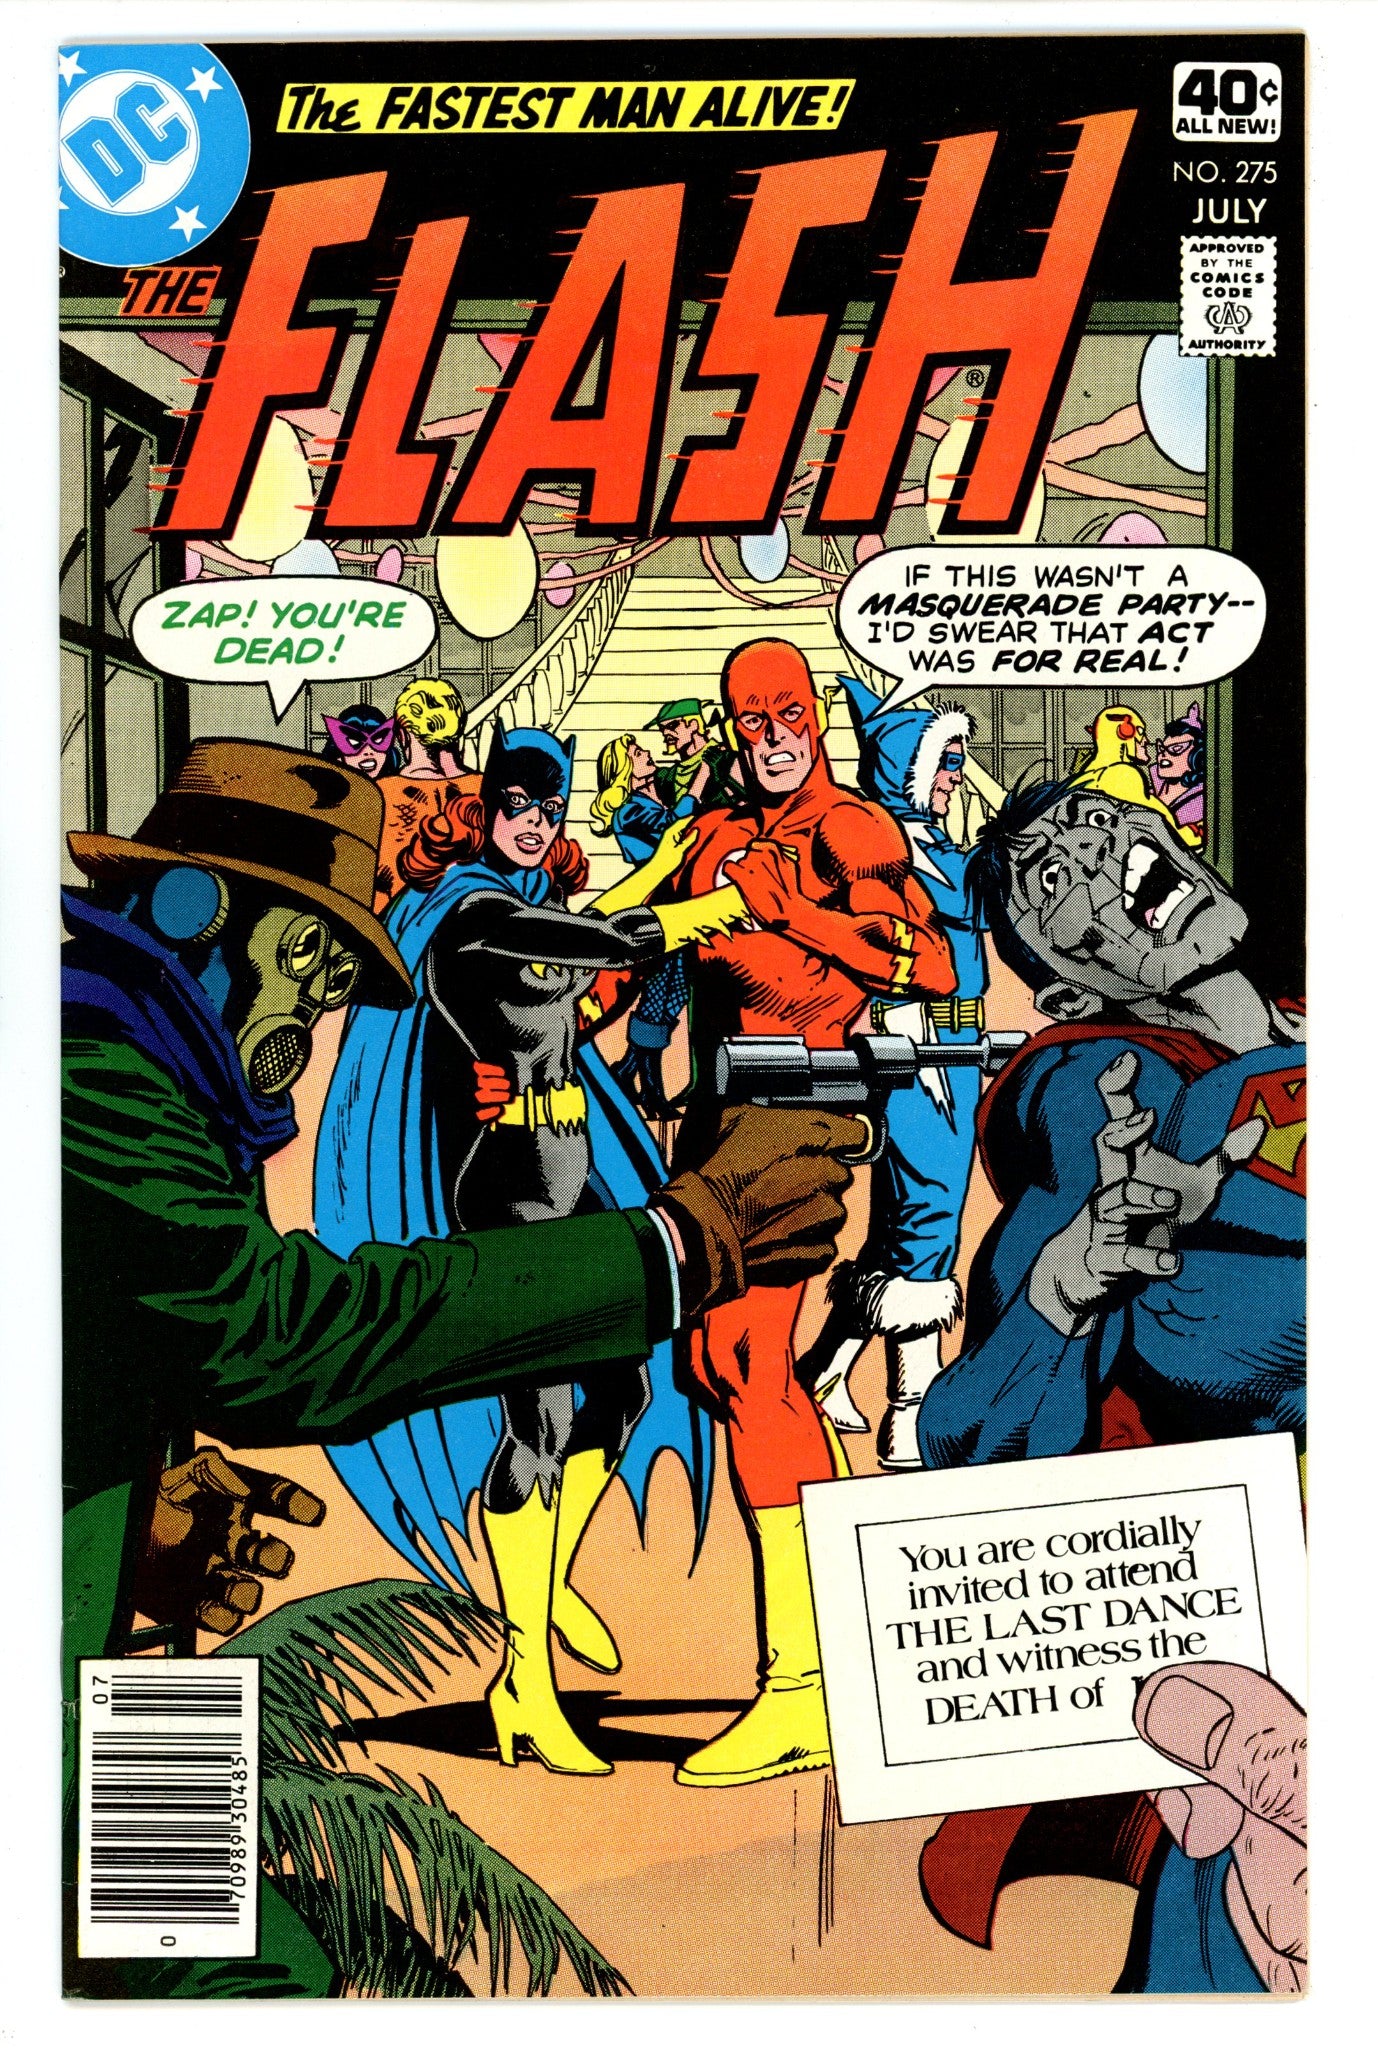 The Flash Vol 1 275 VF- (7.5) (1979) 